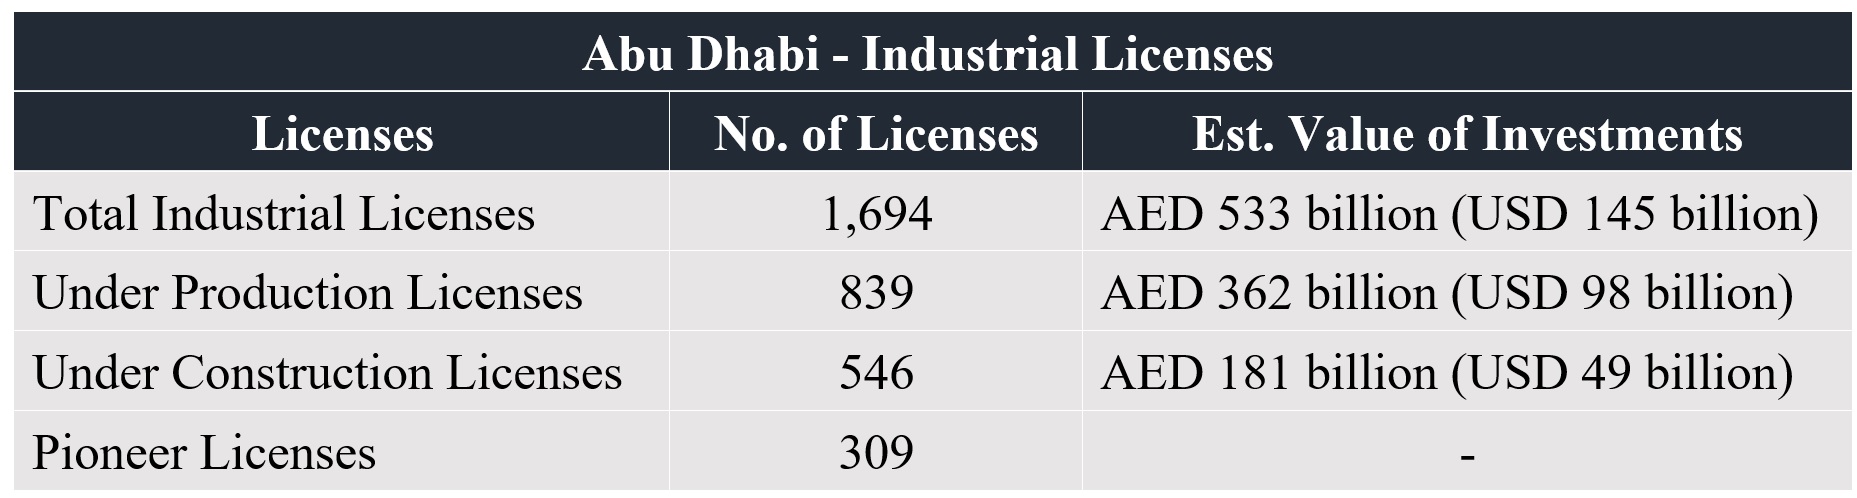 Market Research Companies in Abu Dhabi